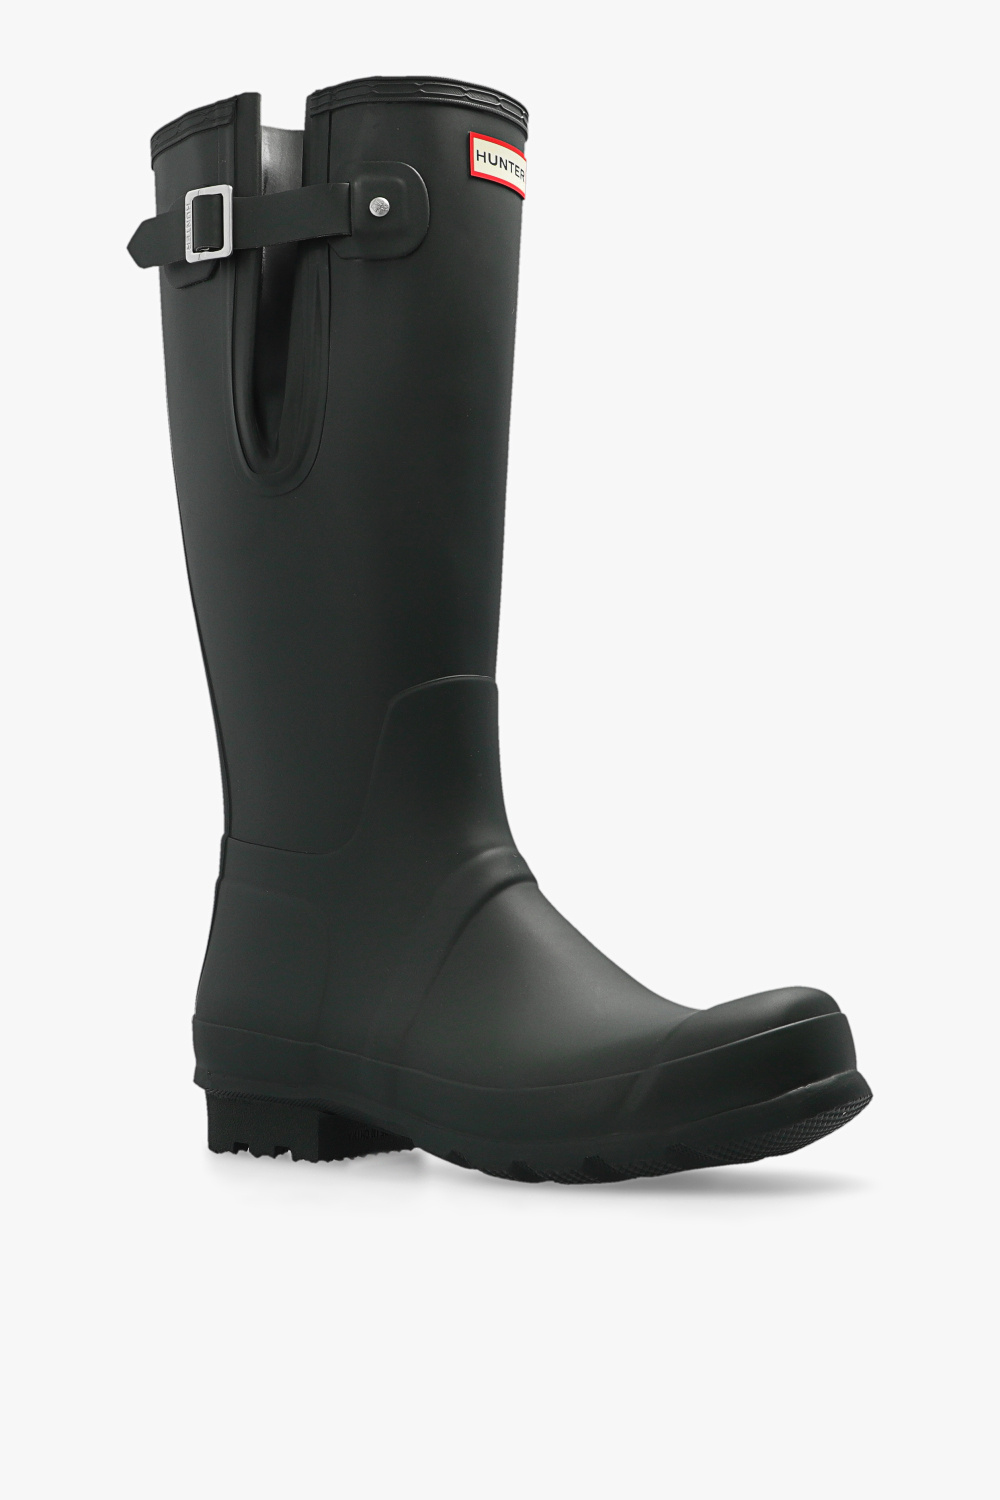 Hunter ‘Original Tall Side Adjustable’ rain boots